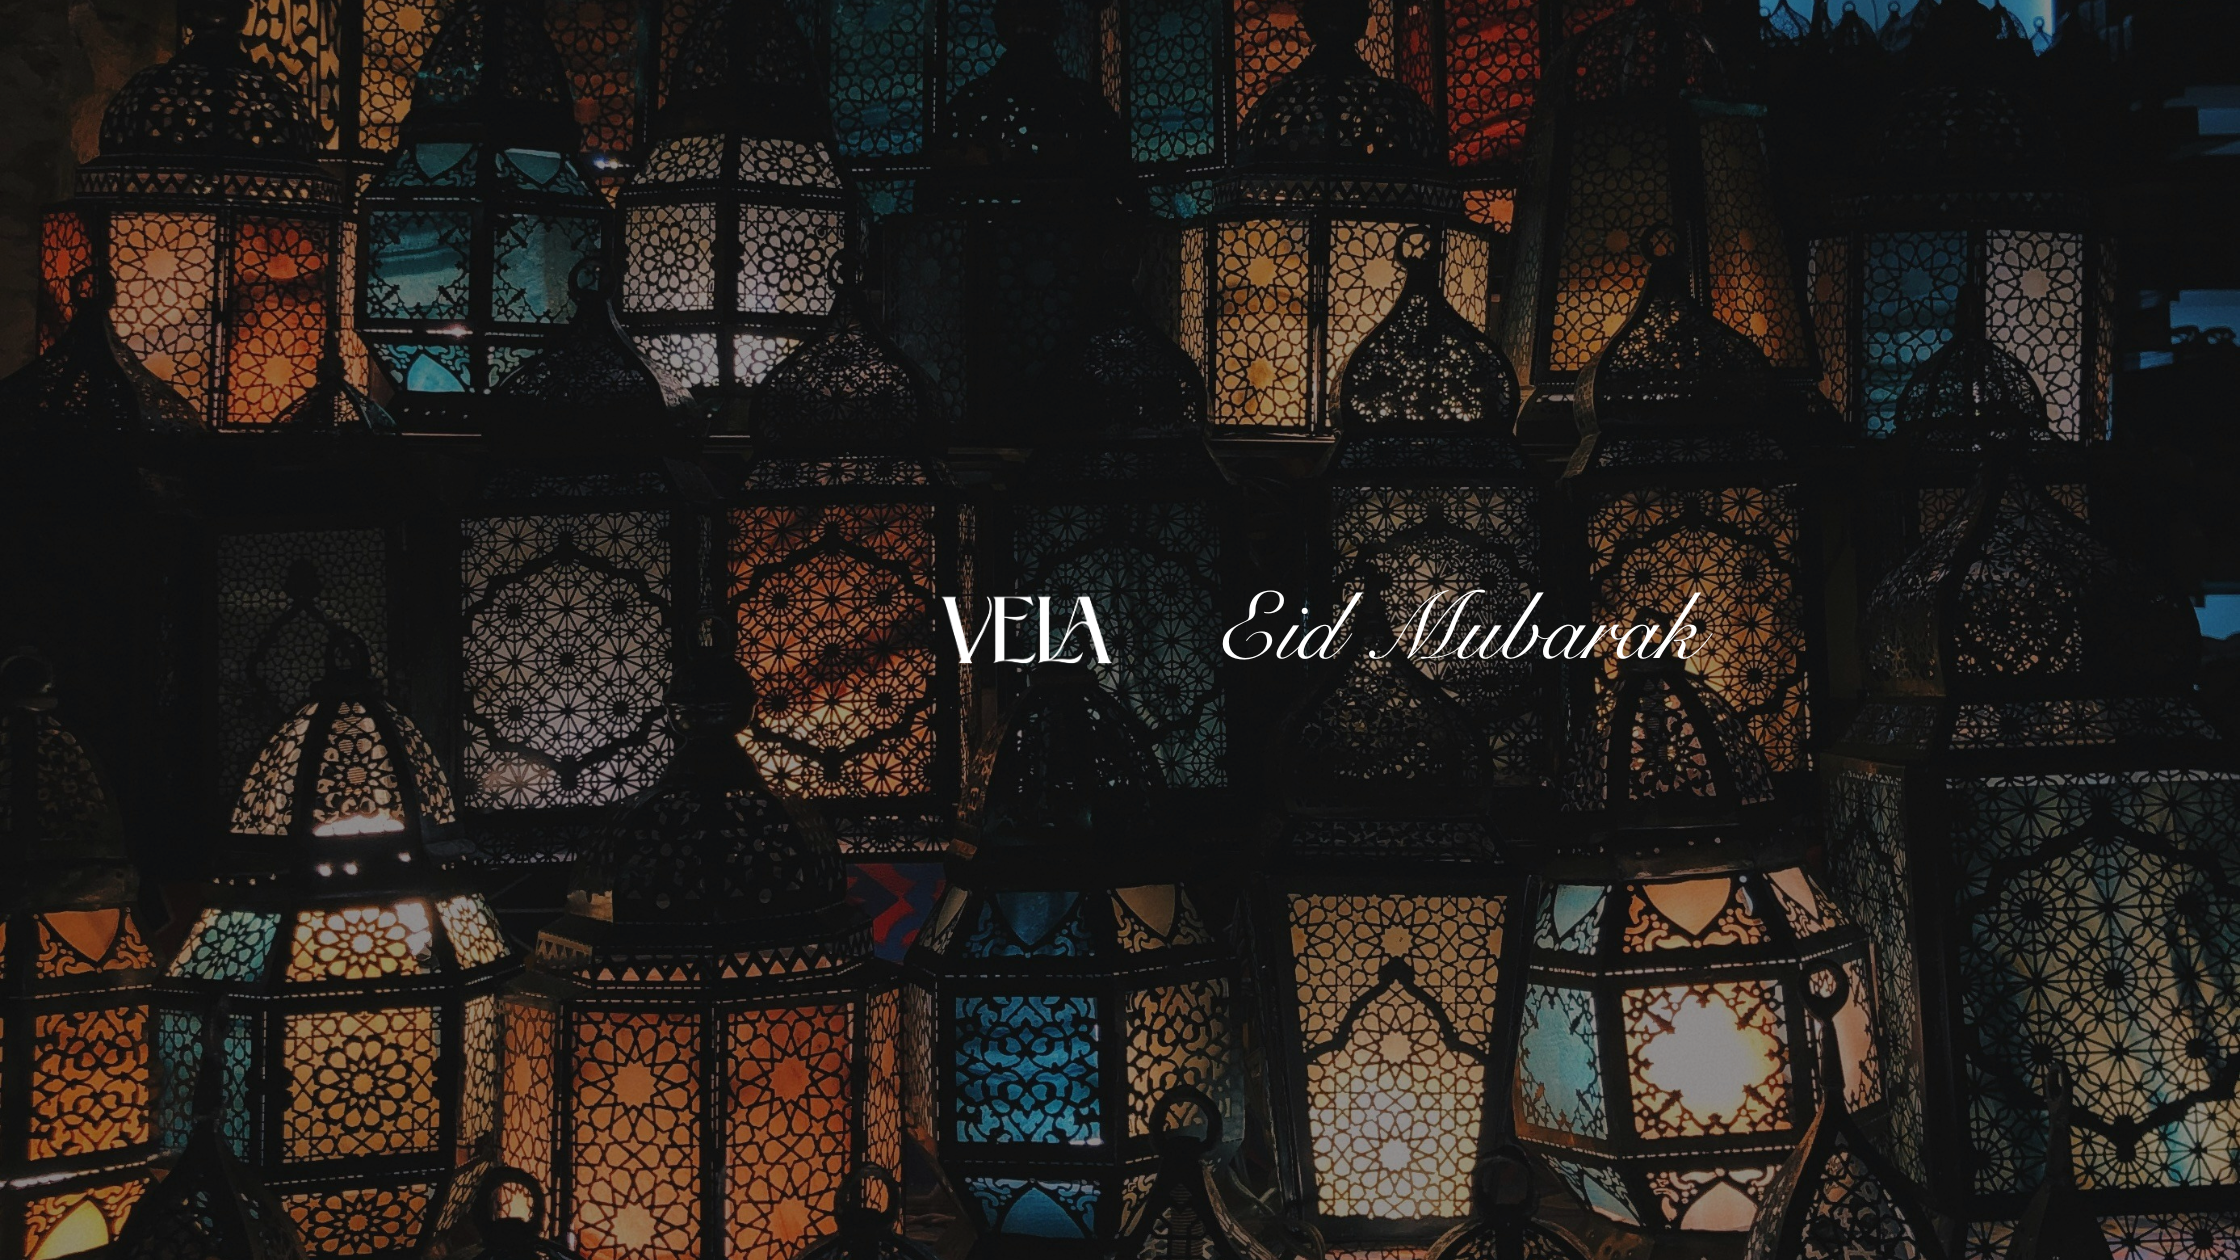 Celebrating Eid and Remembering the Ummah